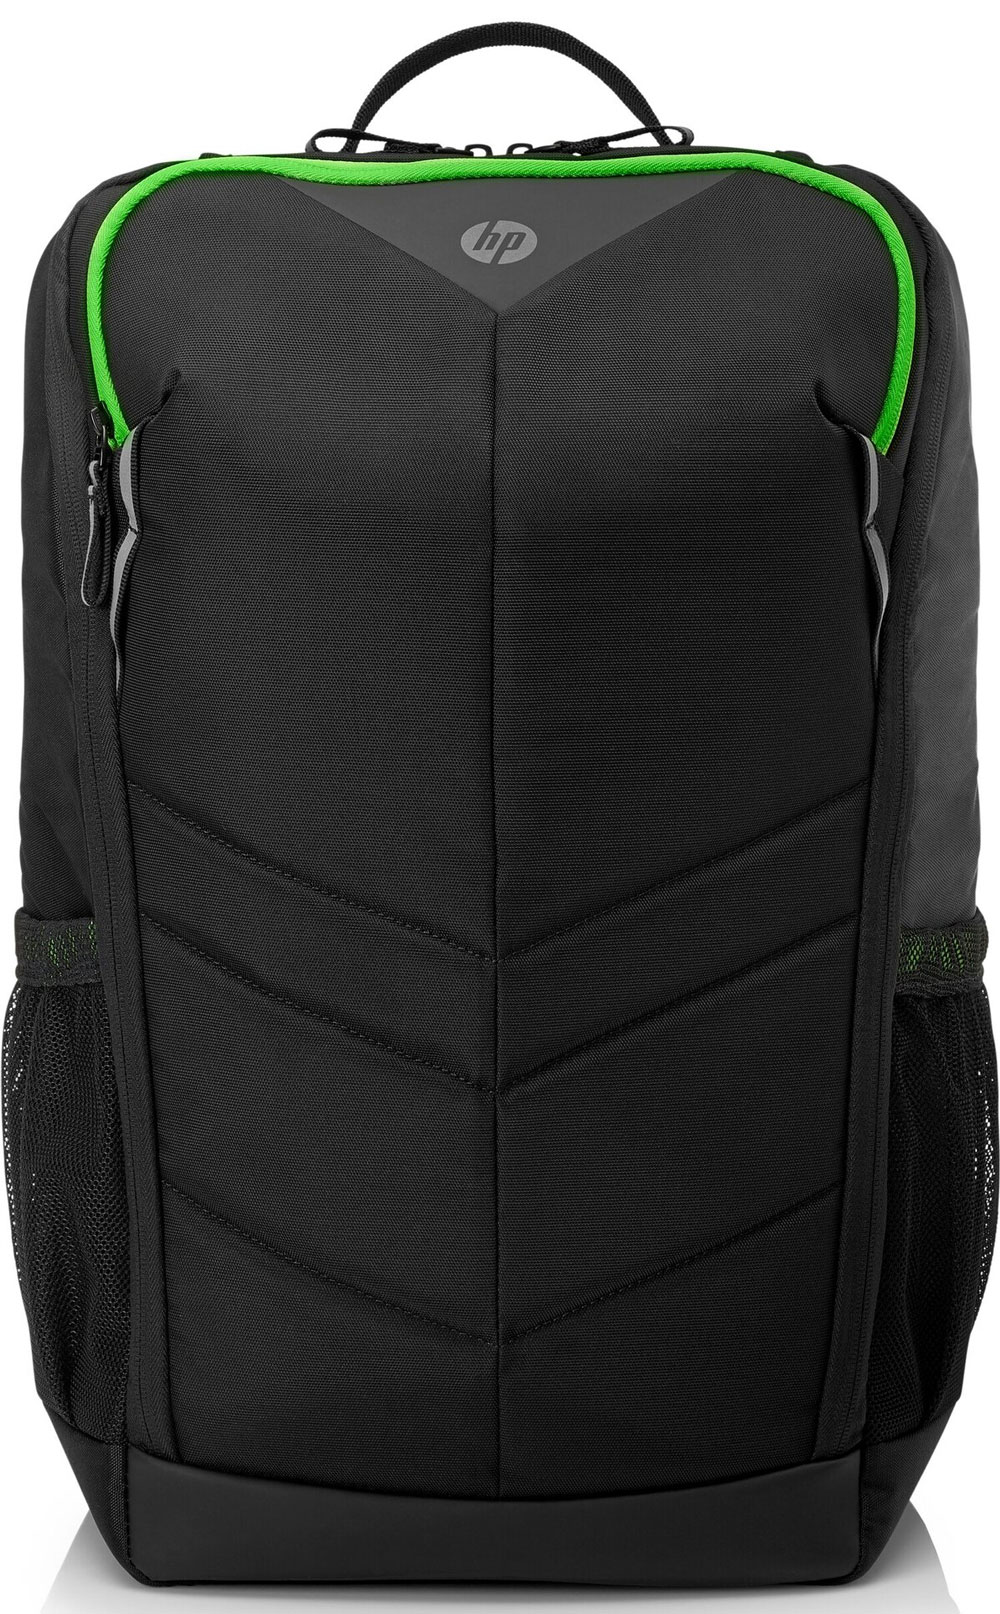 HP Pavilion Gaming Backpack 400 - Black/Green - Best Deal - South Africa